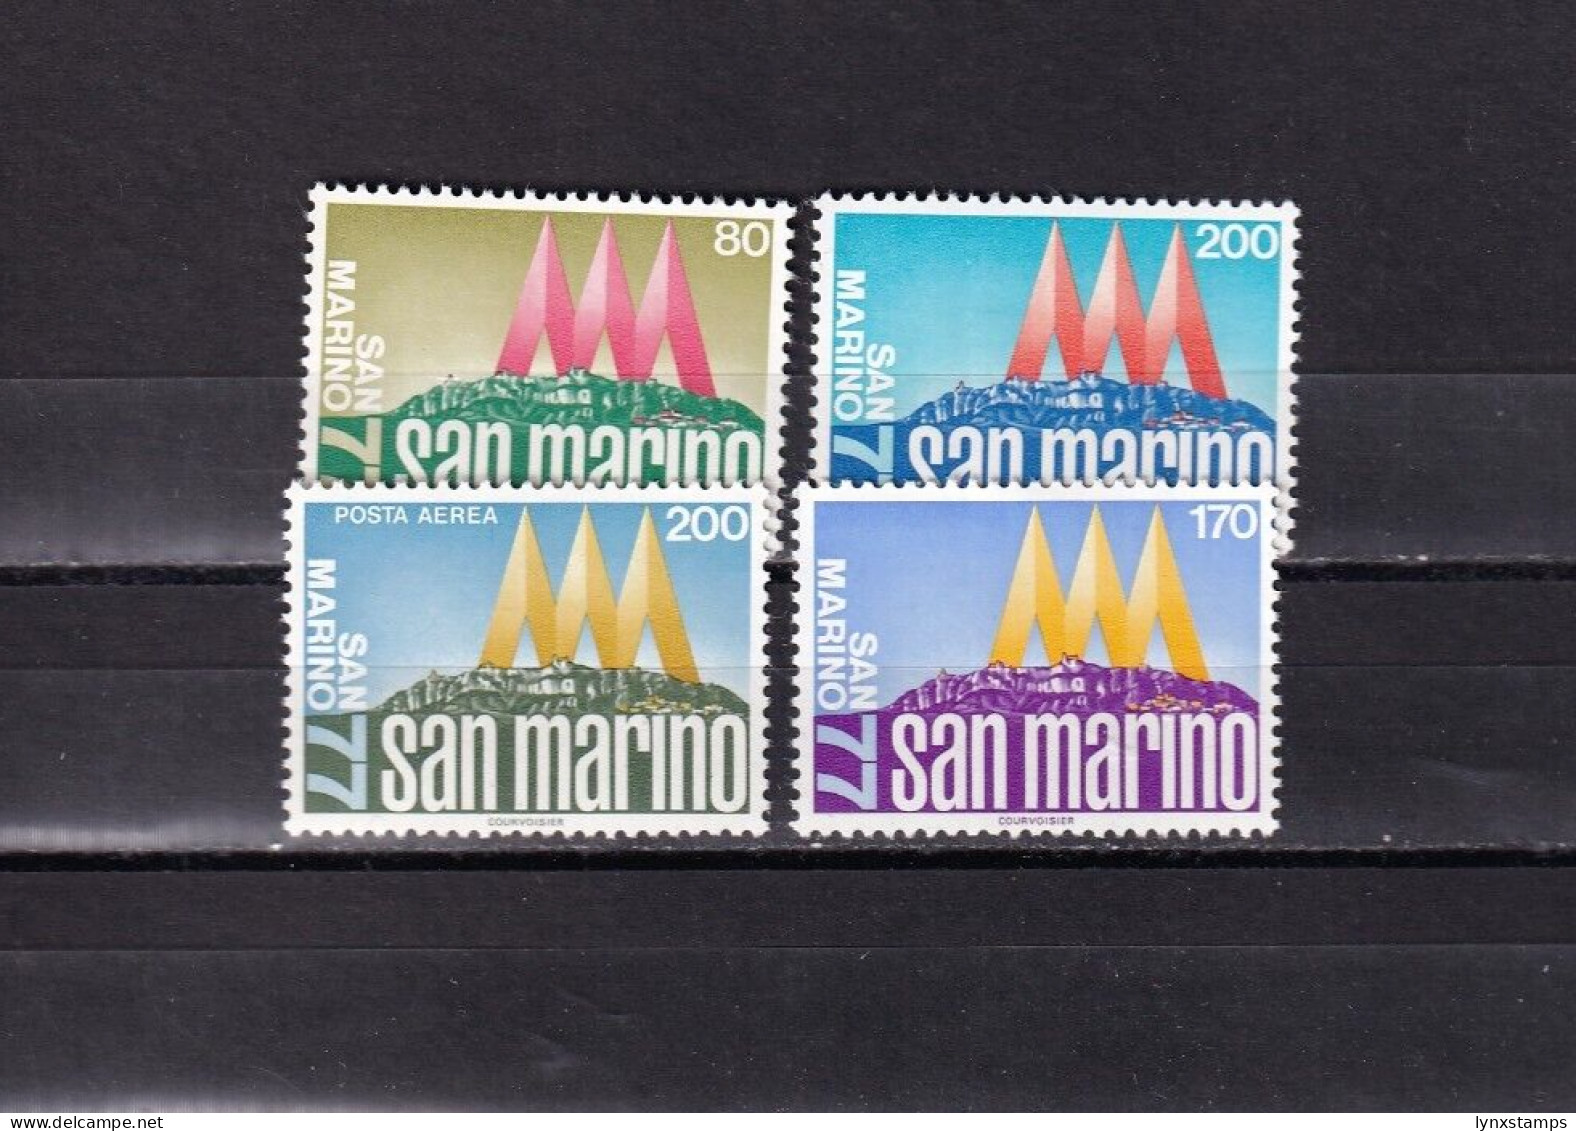 SA04 San Marino 1977 Inter Philatelic Exhibition SAN MARINO '77 Mints Stamps - Neufs